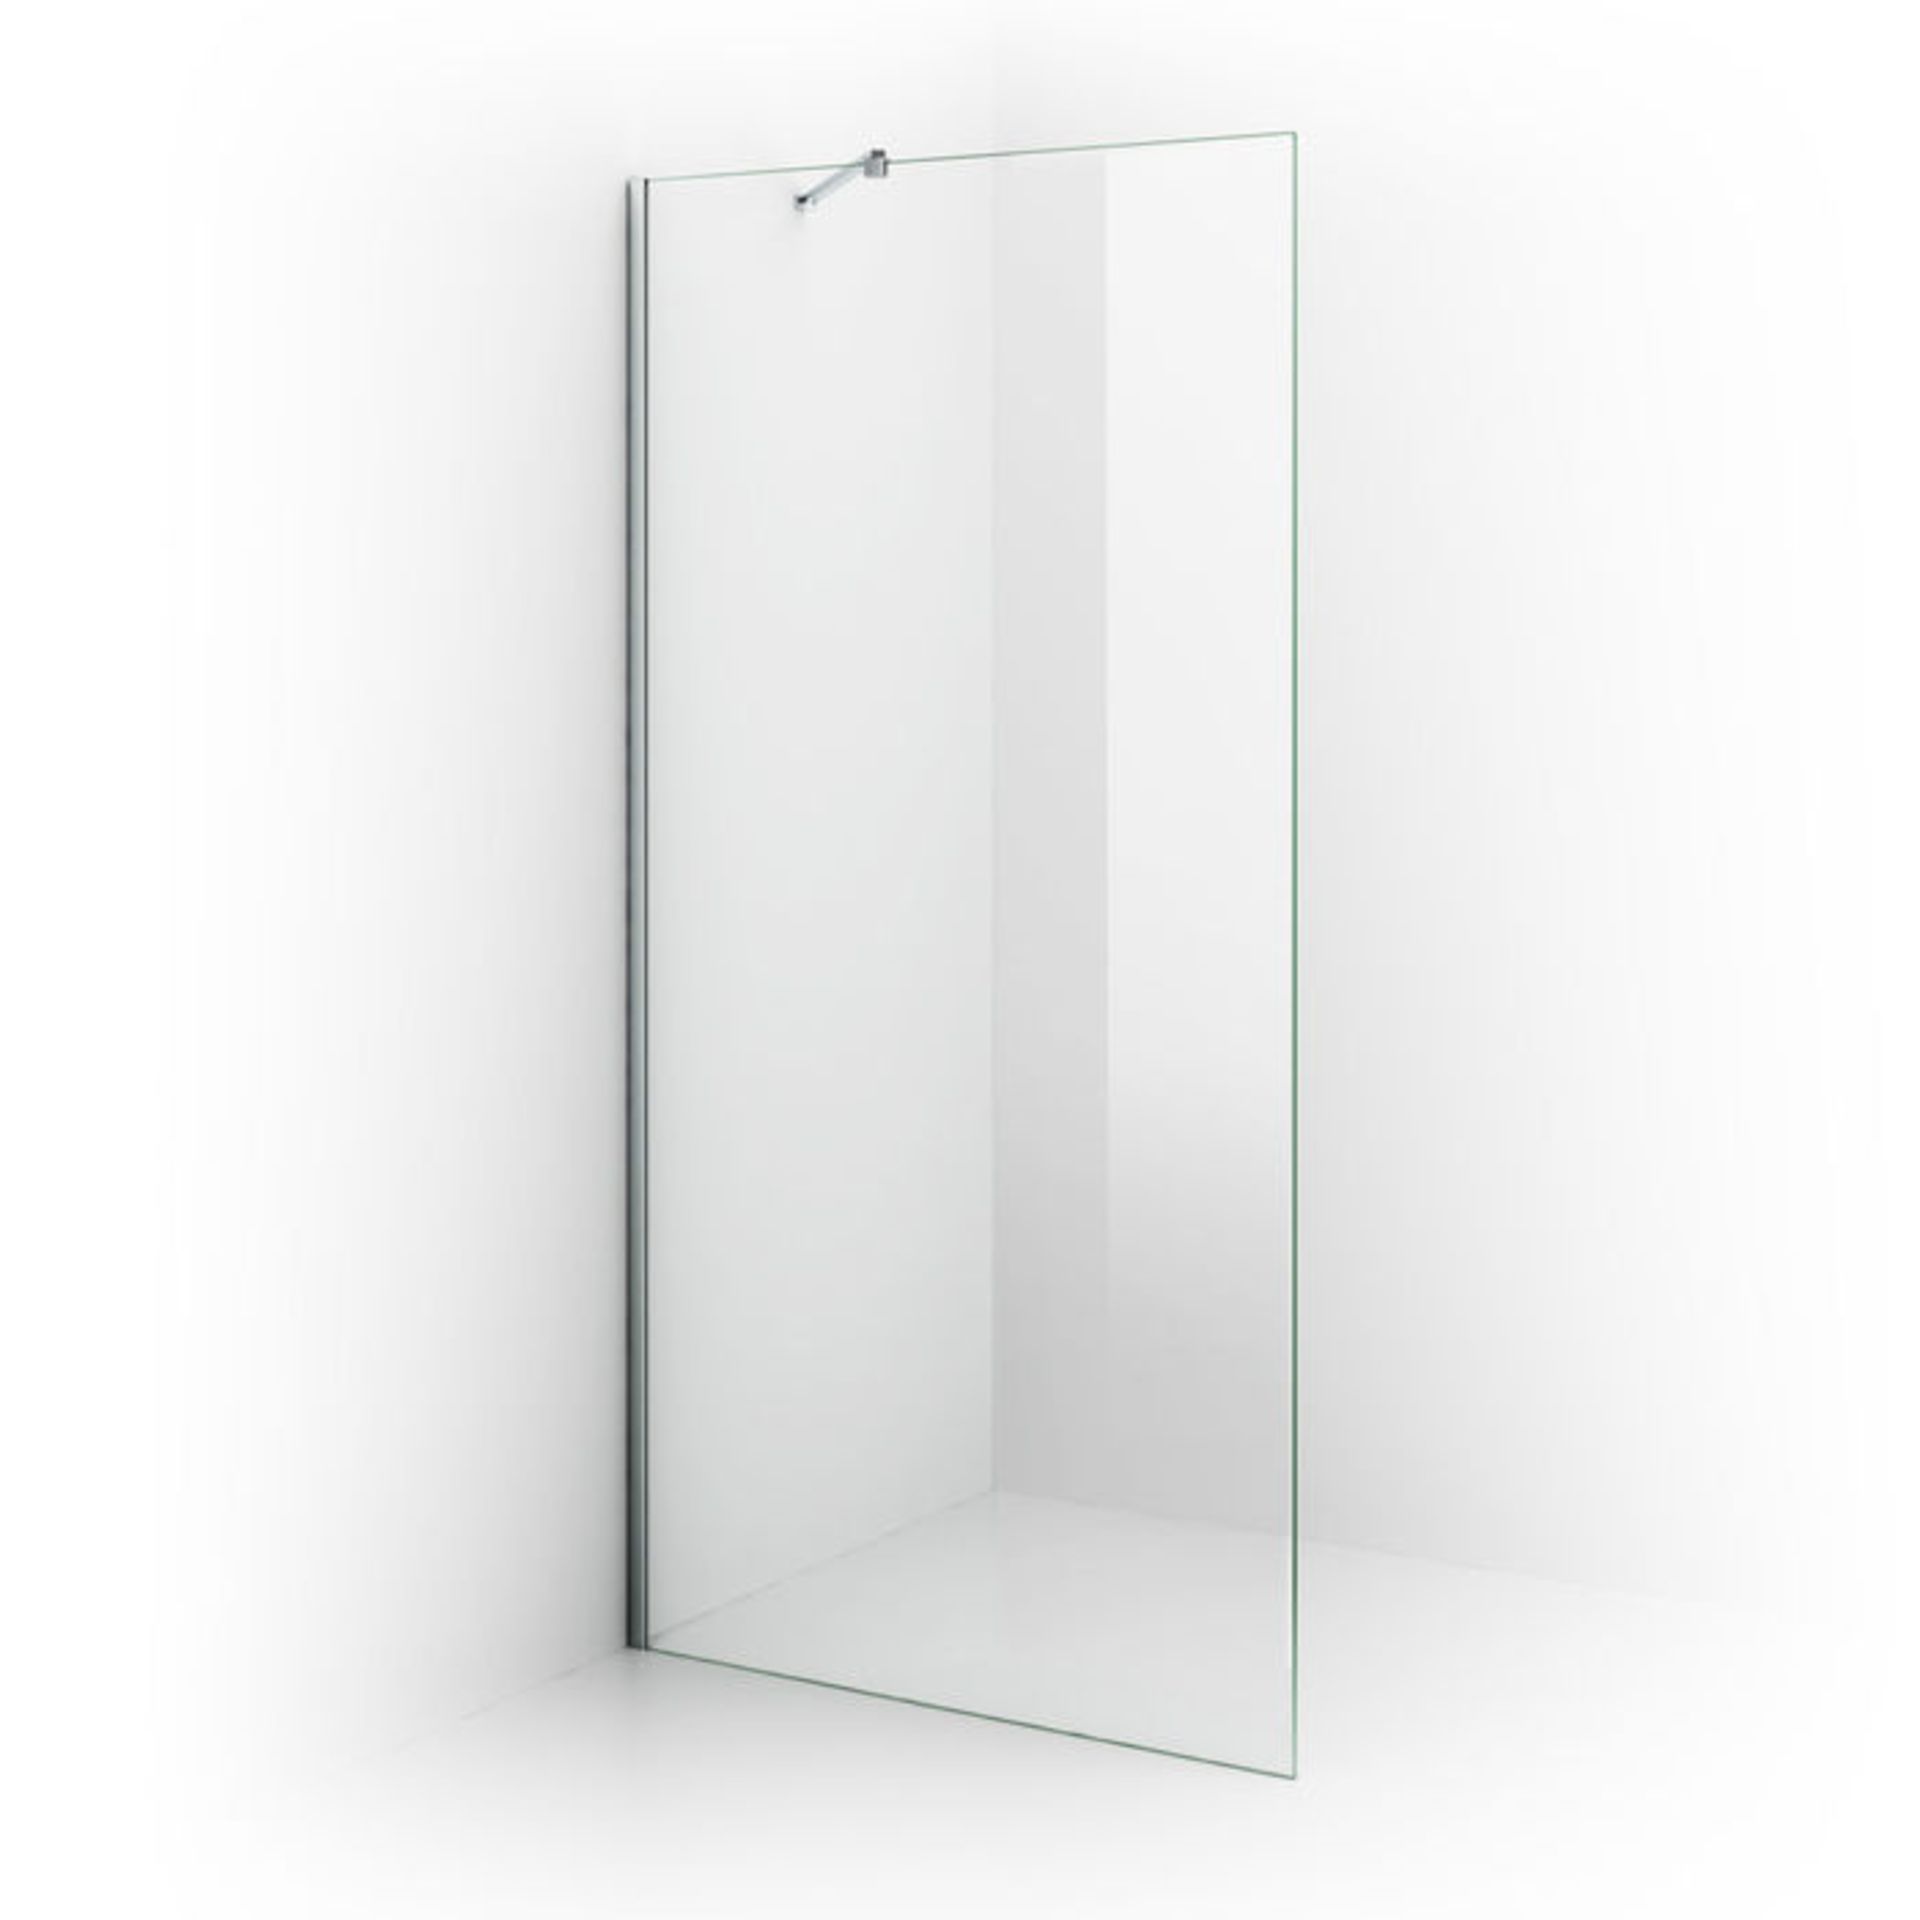 (AL151) 1200mm - 8mm - Premium EasyClean Wetroom Panel. RRP £499.99. 8mm EasyClean glass - Our glass - Image 4 of 5